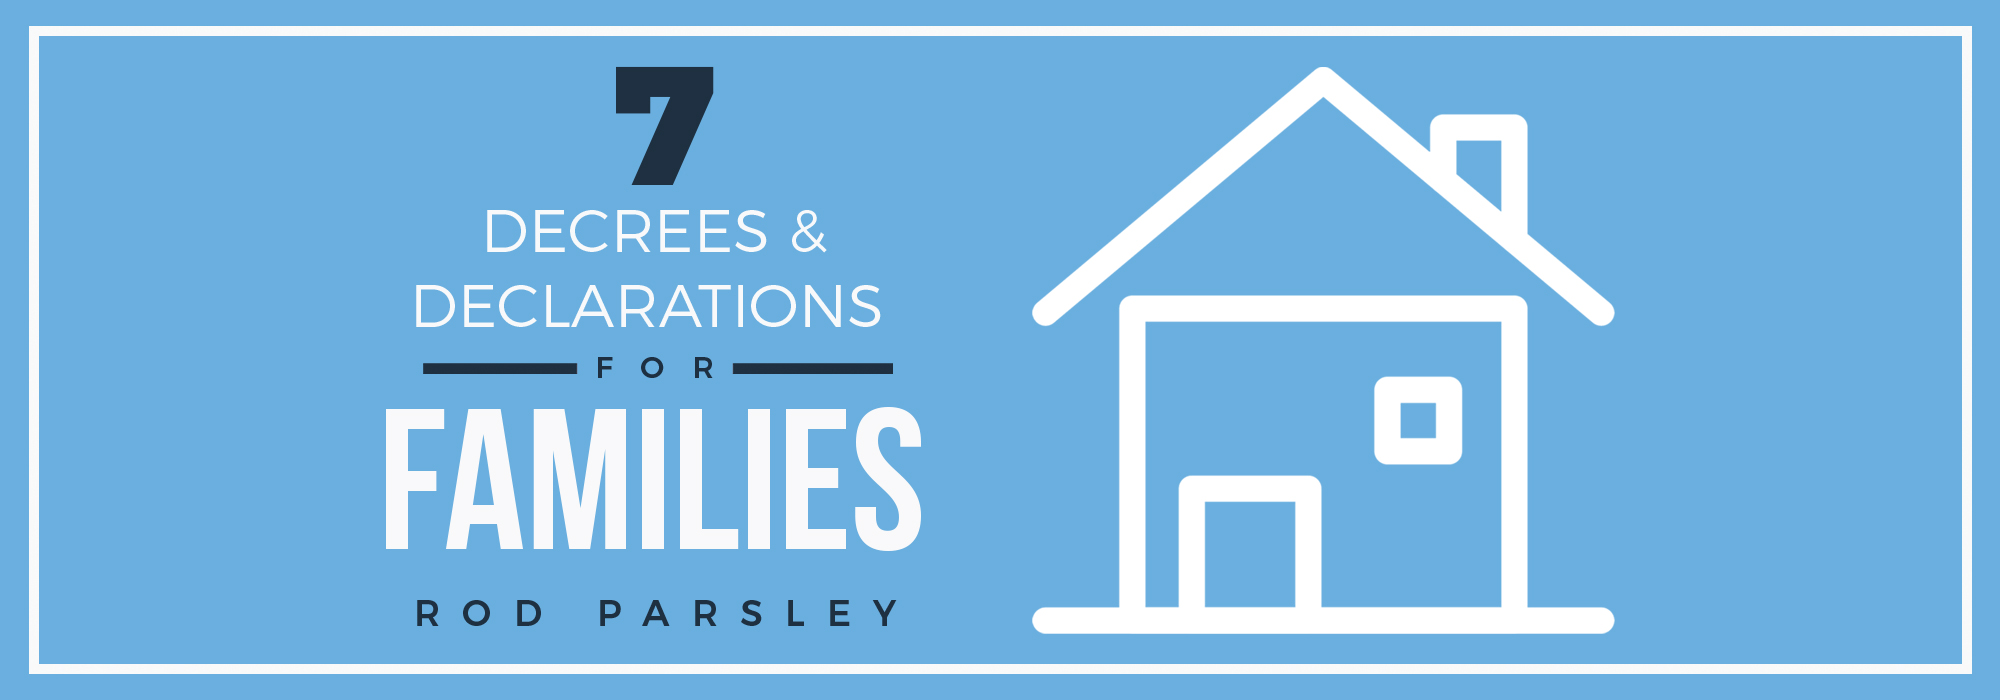 7 Decrees & Declarations for Families